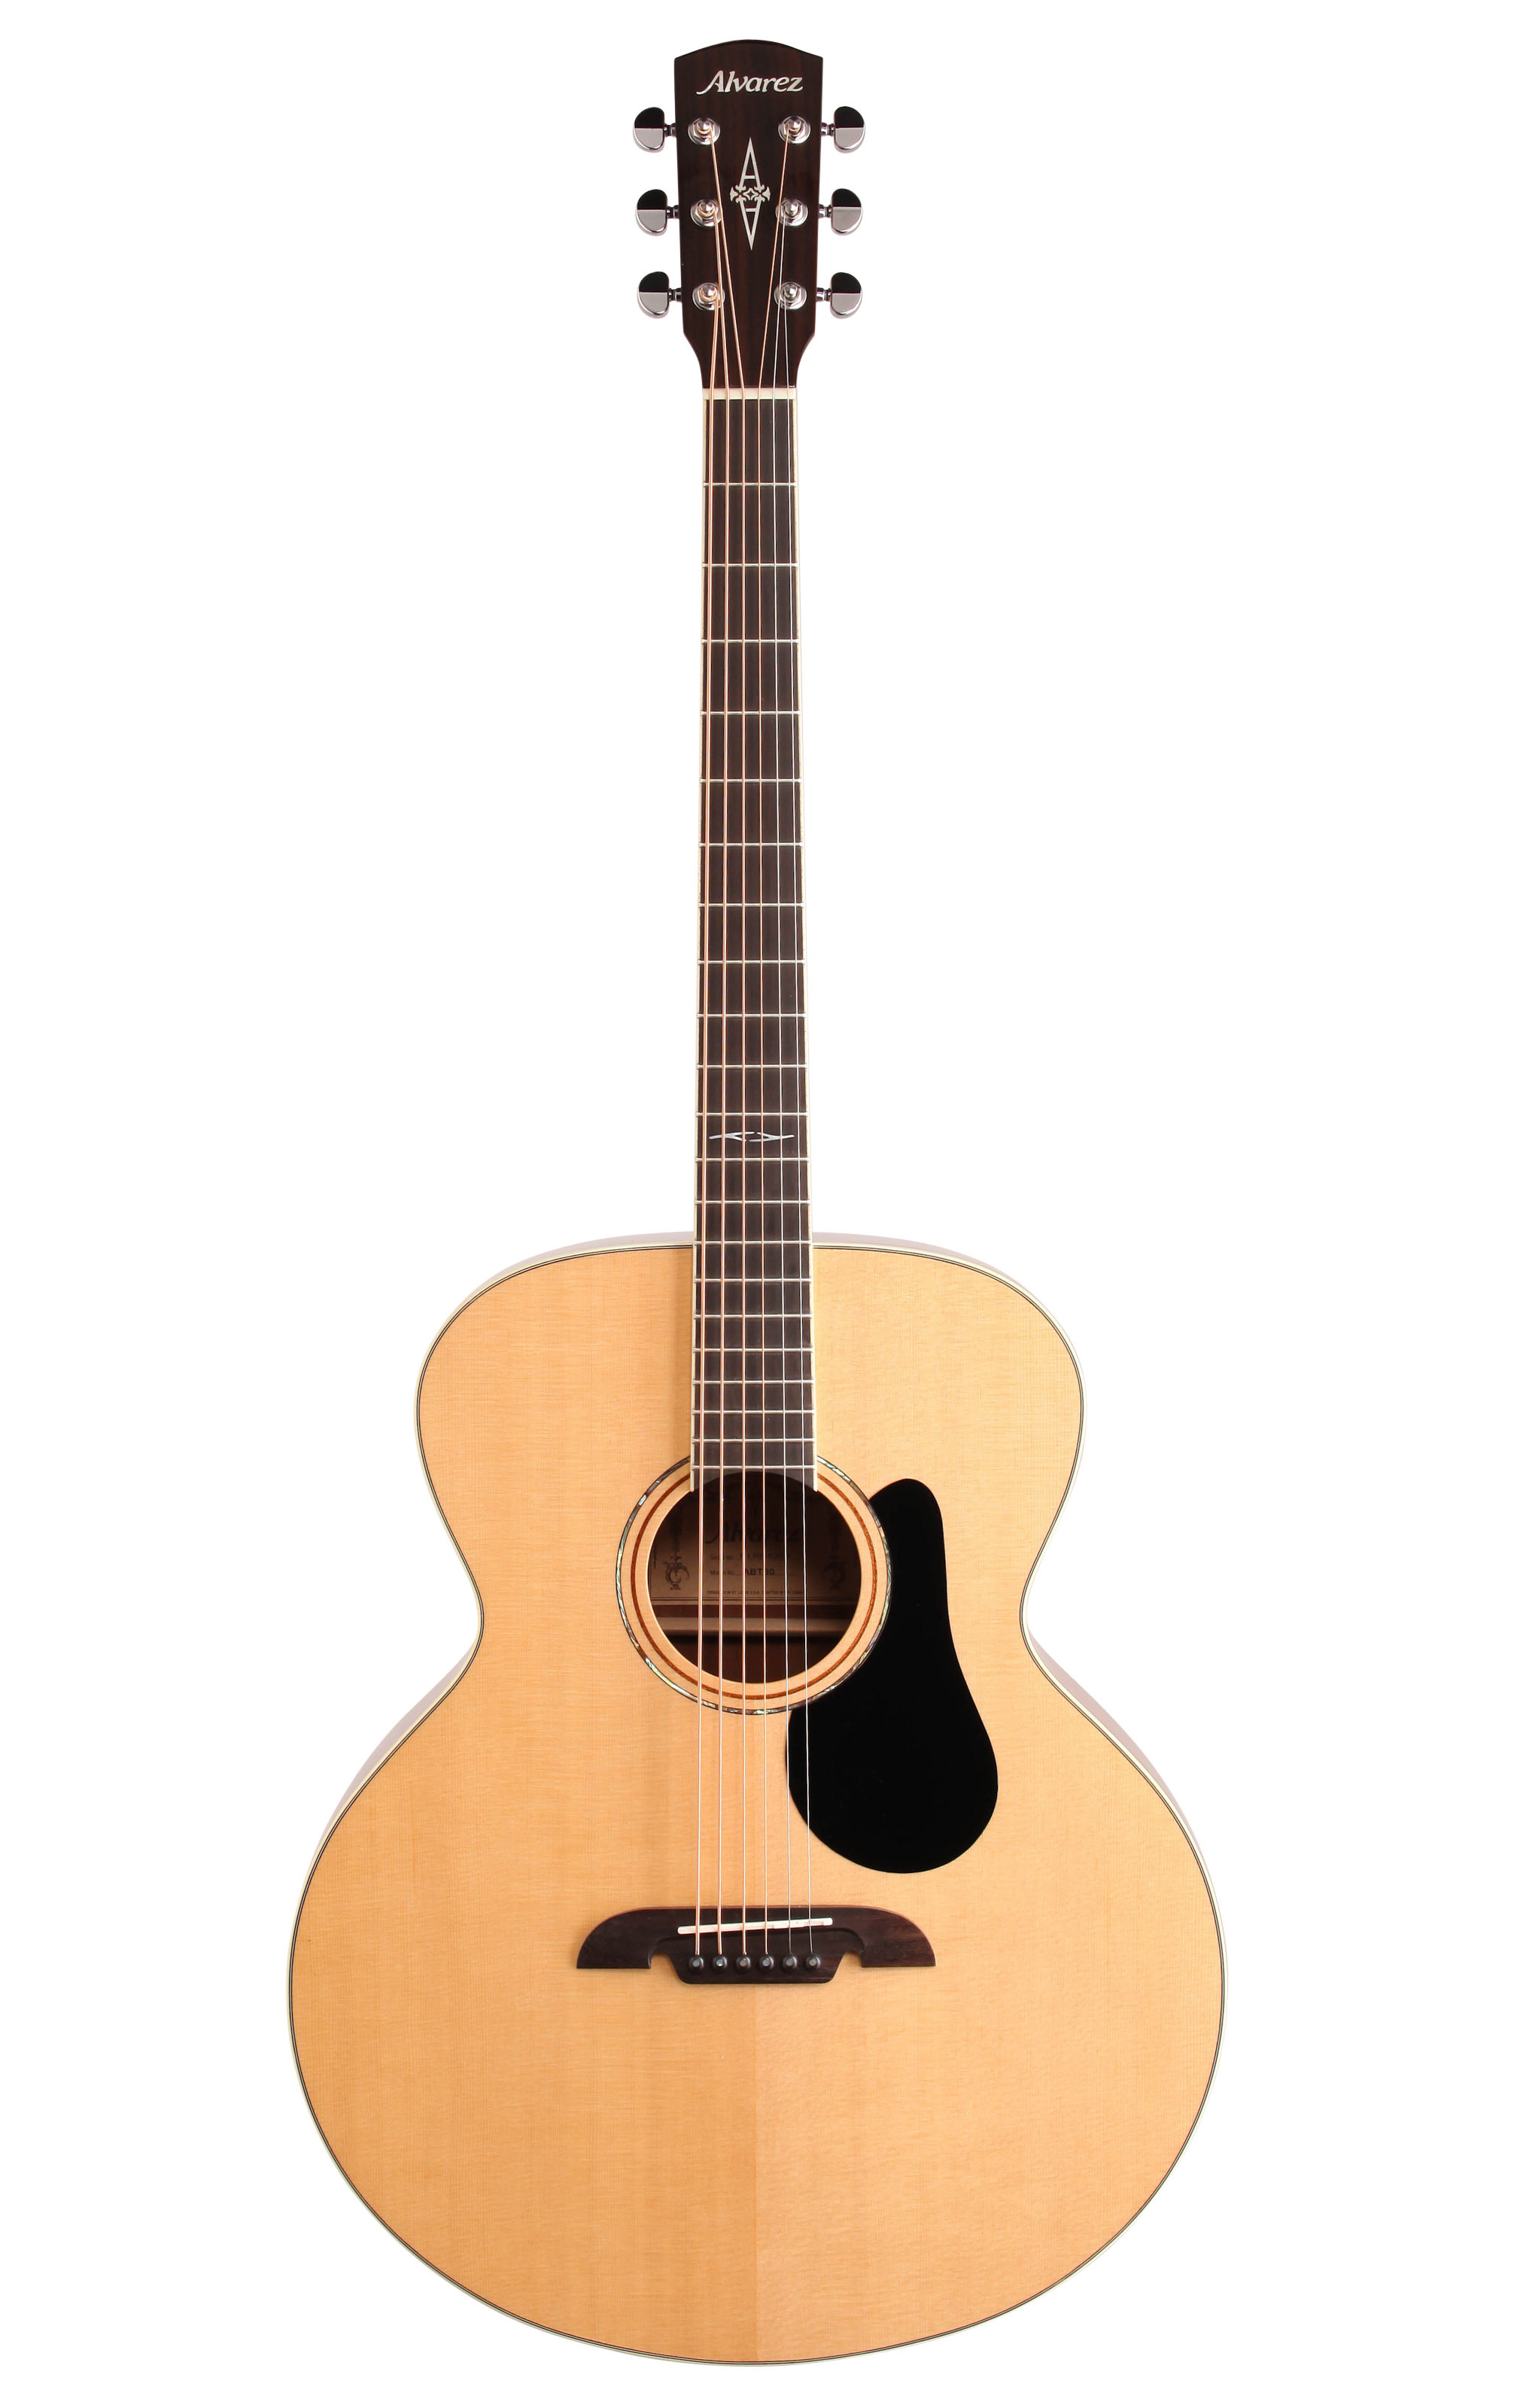 Alavarez ABT60 Baritone Acoustic Guitar -  Alvarez